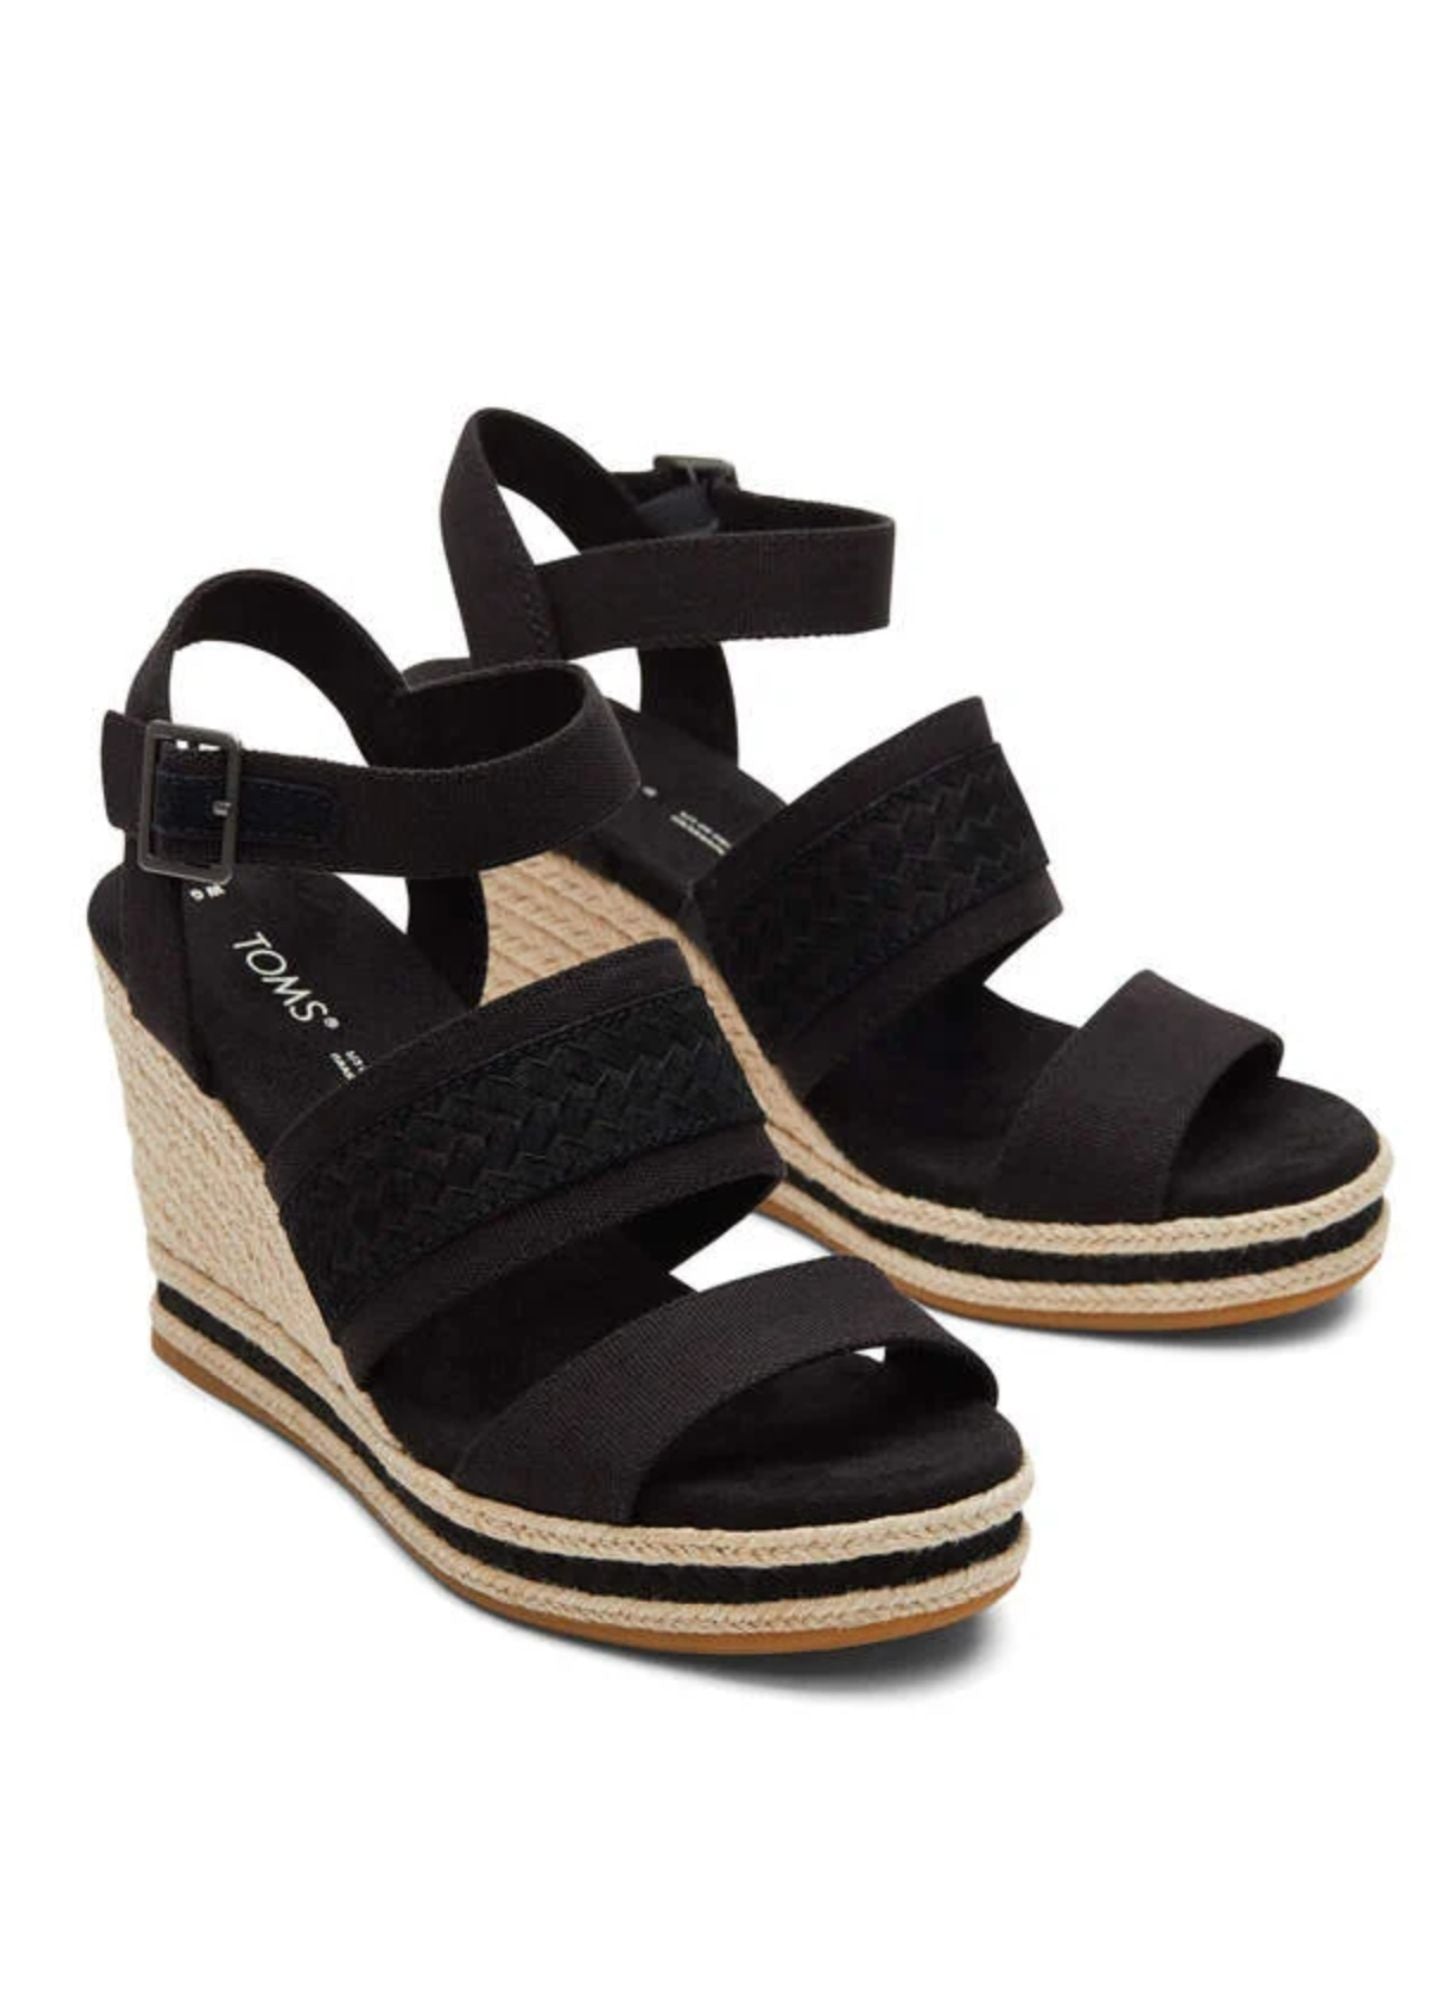 TOMS® Madelyn Black Canvas Wedge Sandal Shoes